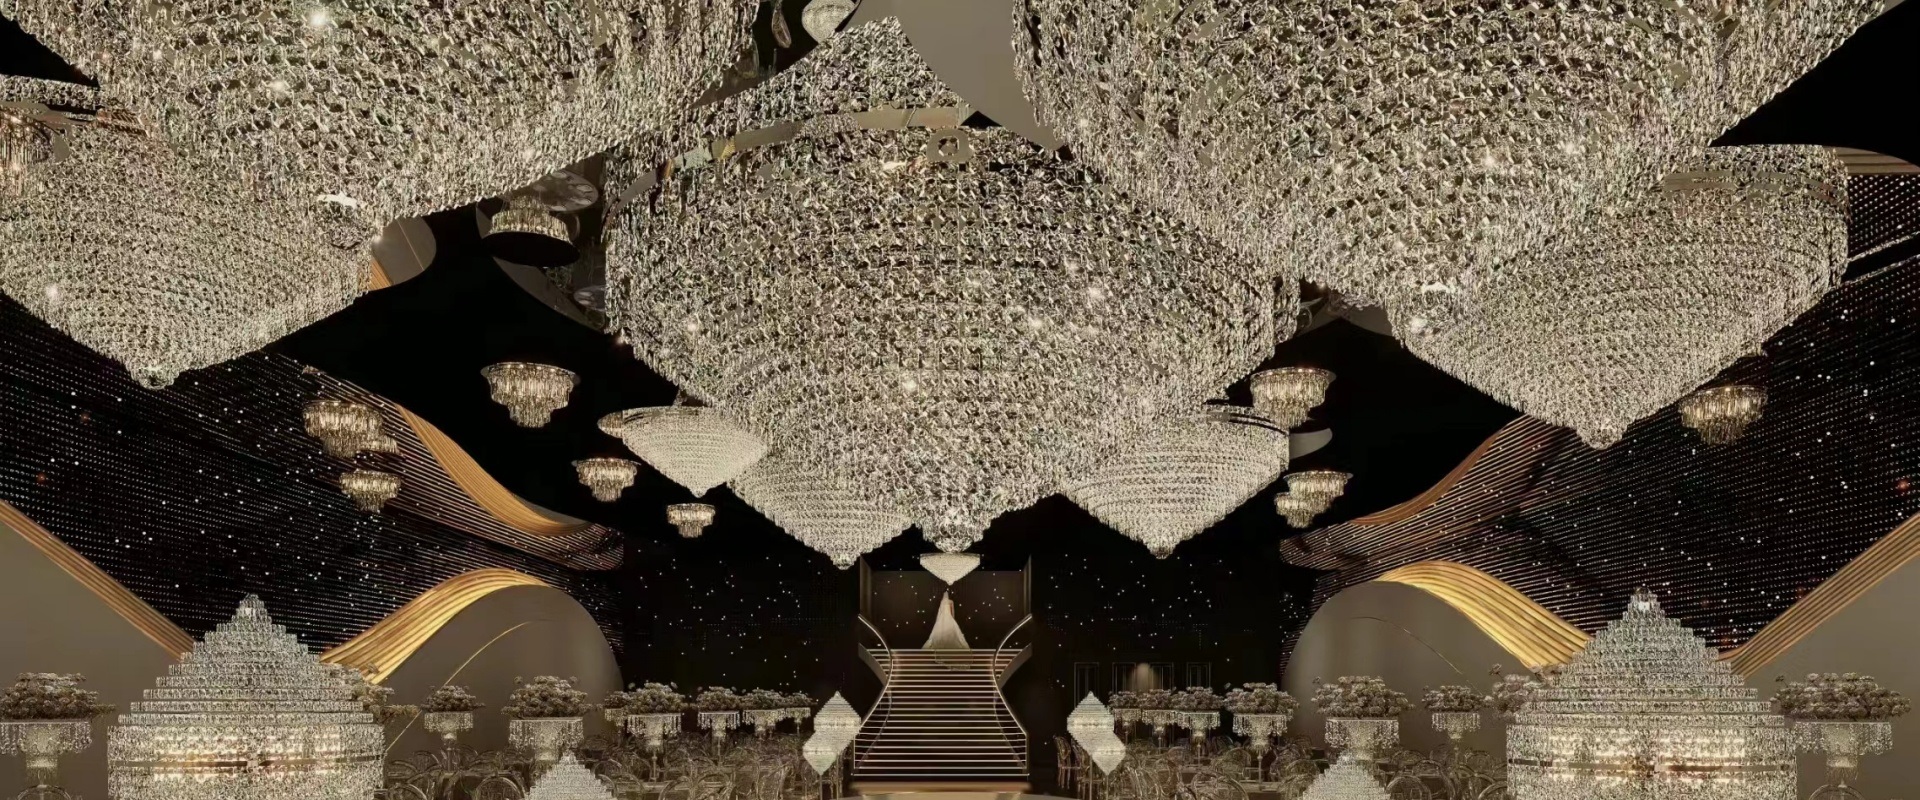 Dutti LED Modern Chandelier Large Crystal Ceiling Pendant Lighting Unique Design OEM ODM for Wedding Banquet Hall South Africa